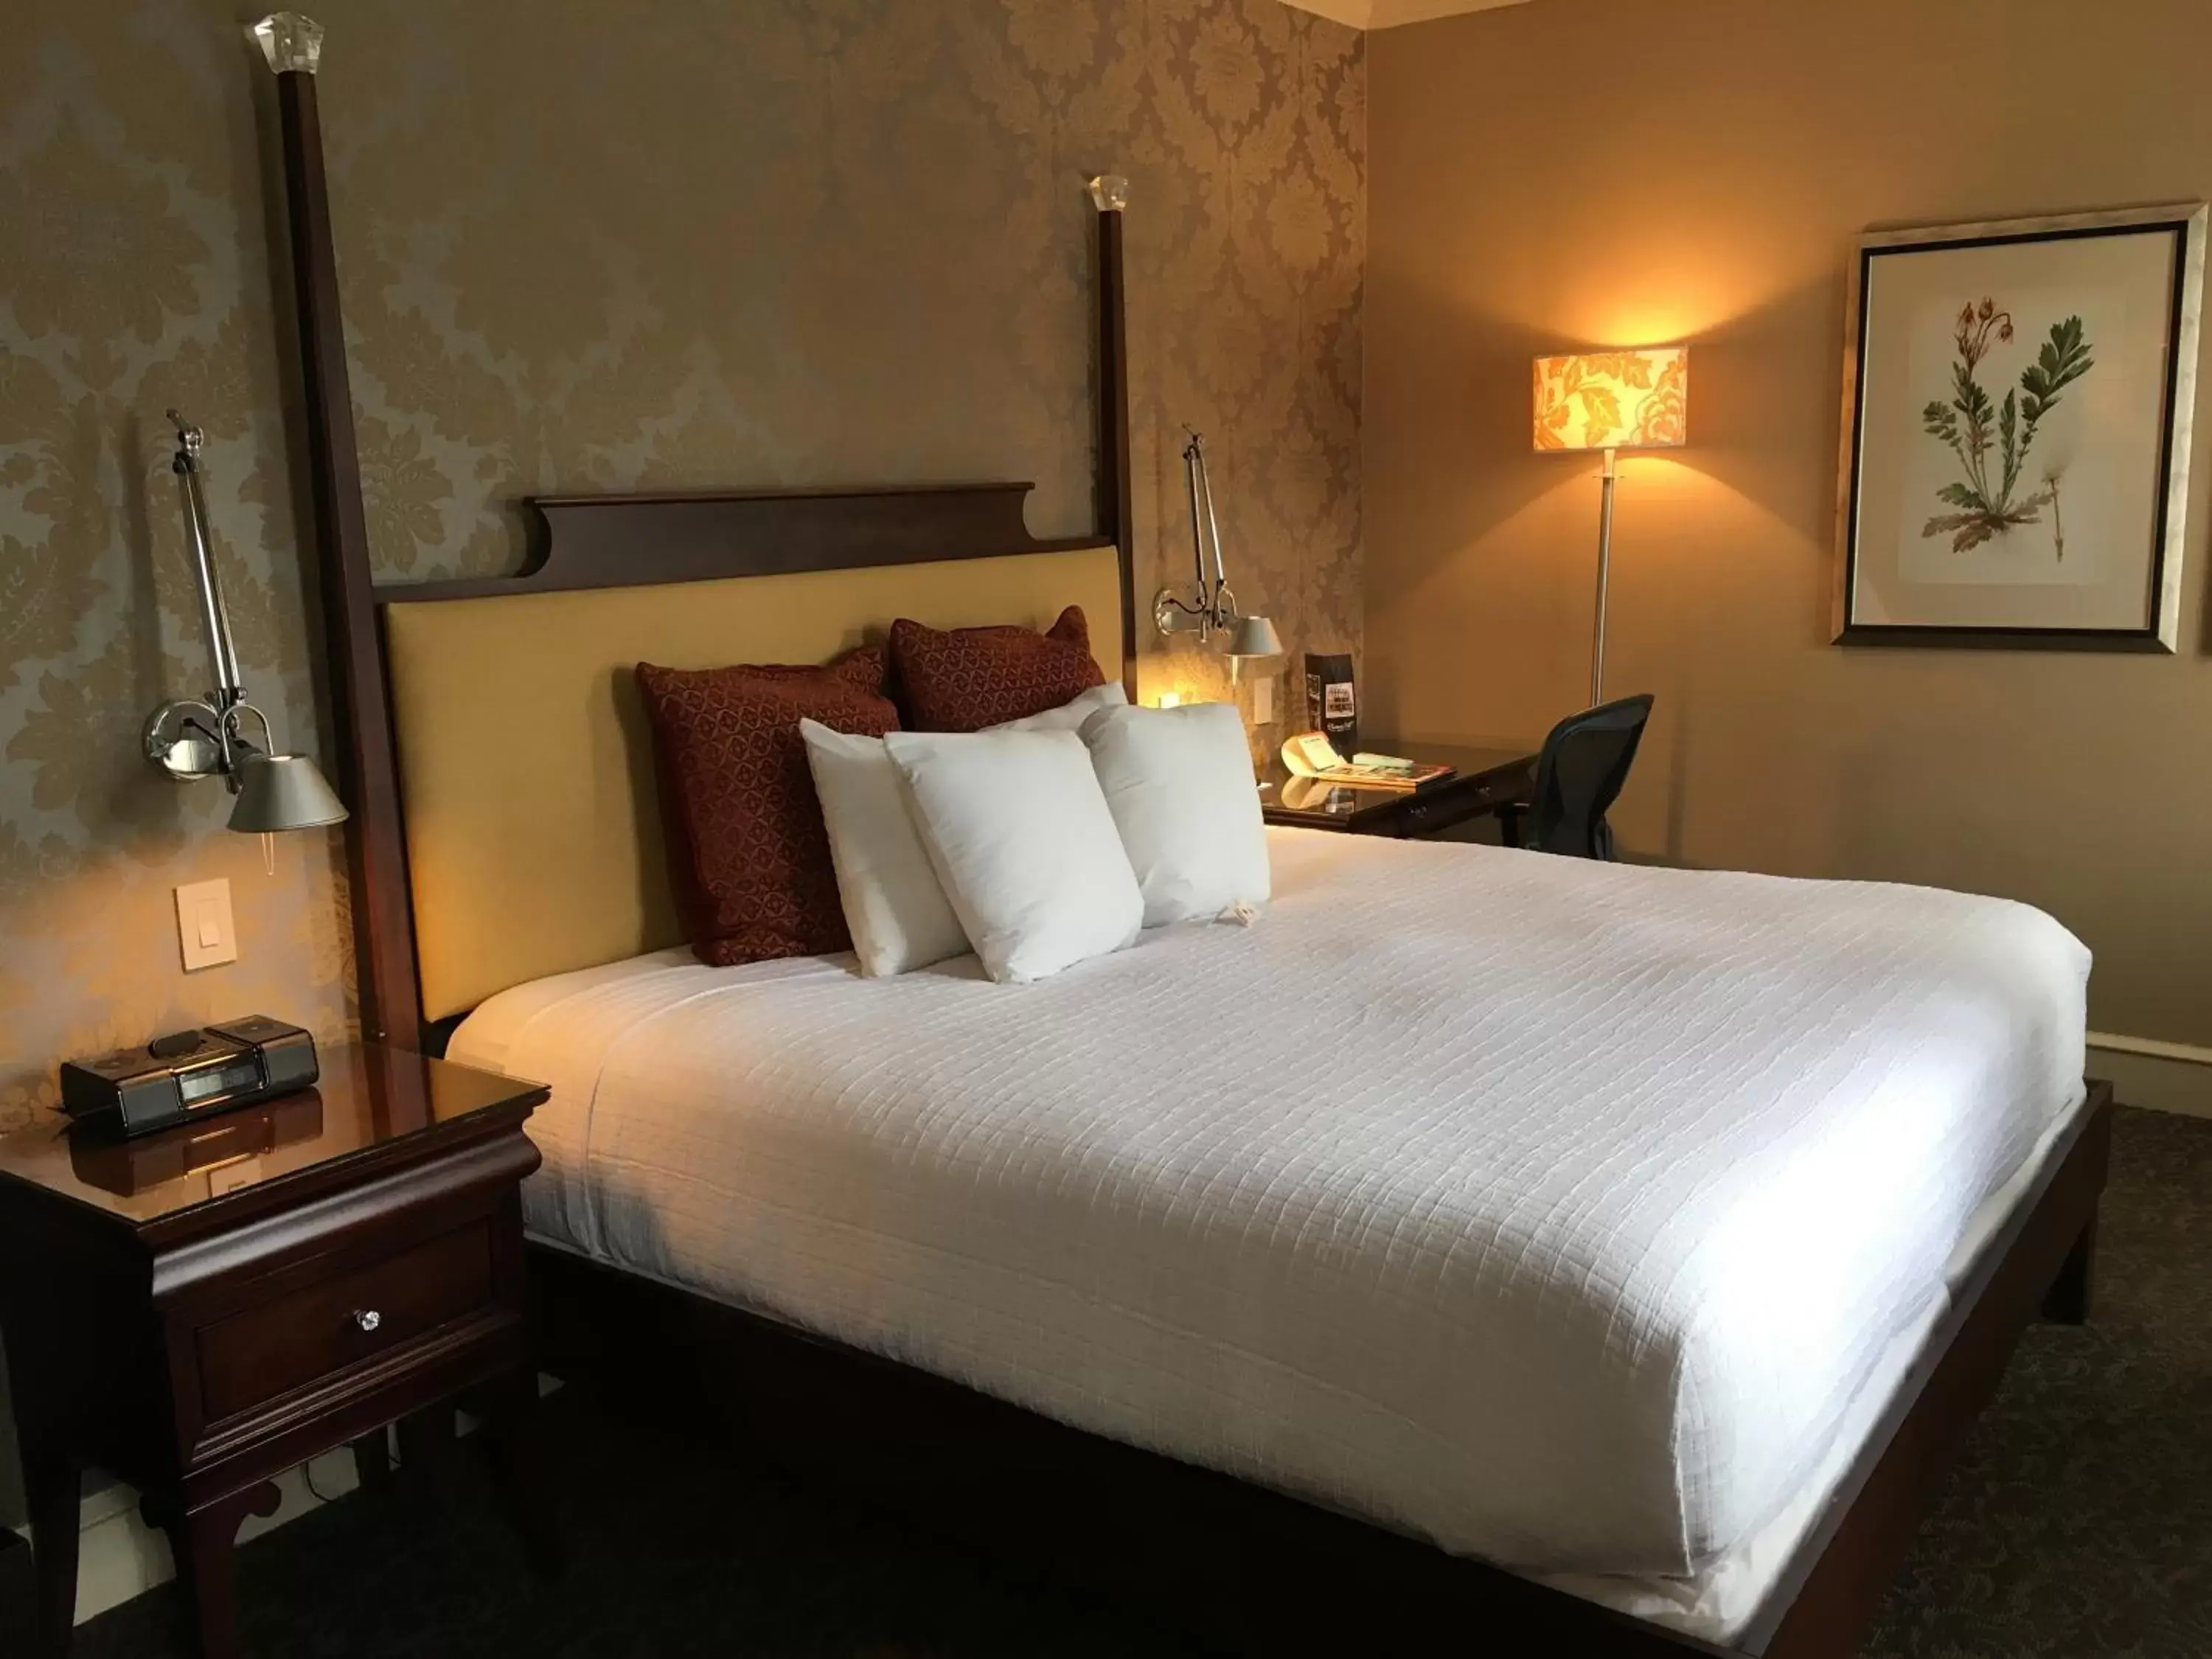 King Room in Chestnut Hill Hotel